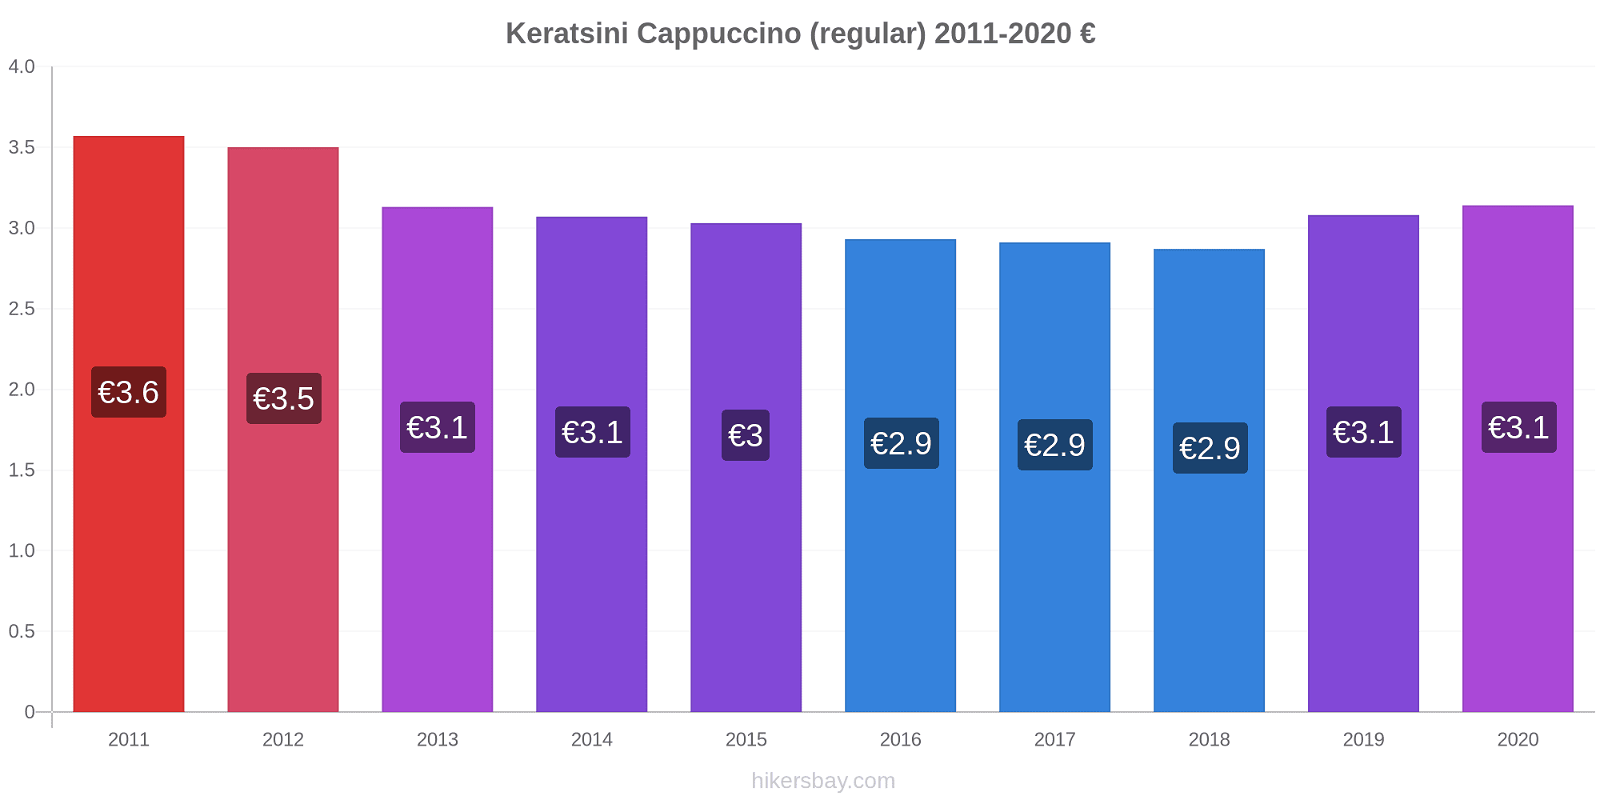 Keratsini price changes Cappuccino (regular) hikersbay.com